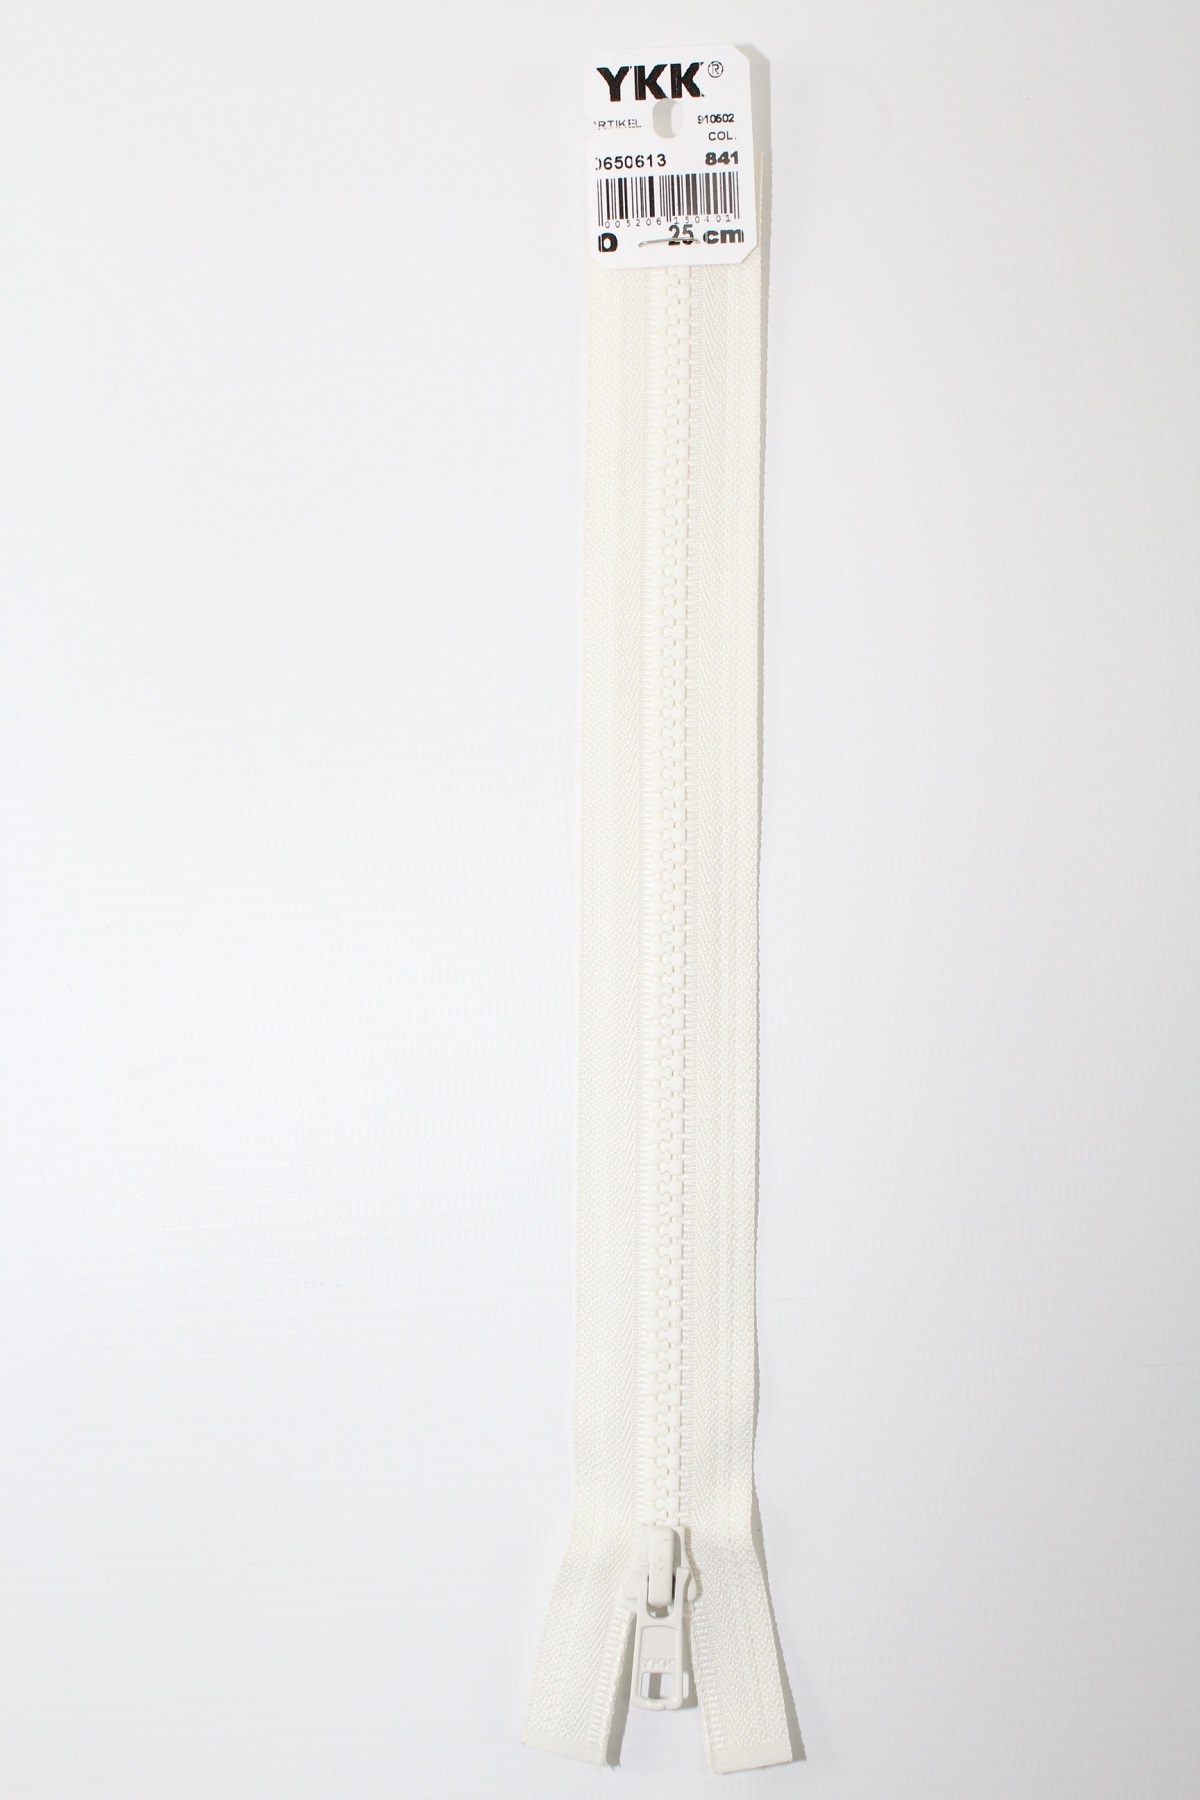 YKK - Reissverschlüsse 25 cm - 80 cm, teilbar, rohweiss